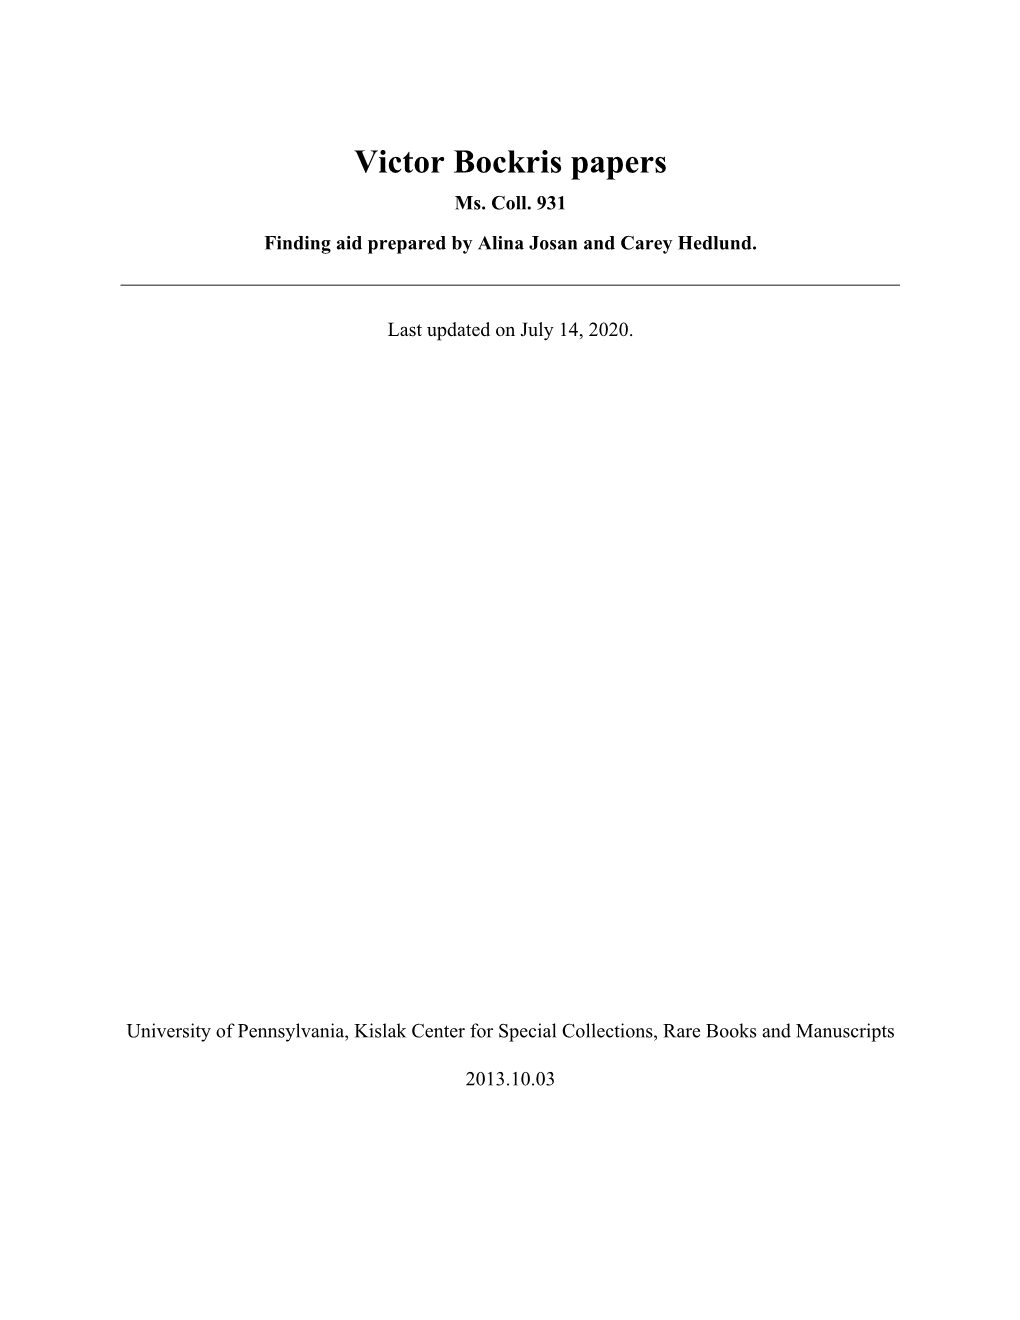 Victor Bockris Papers Ms